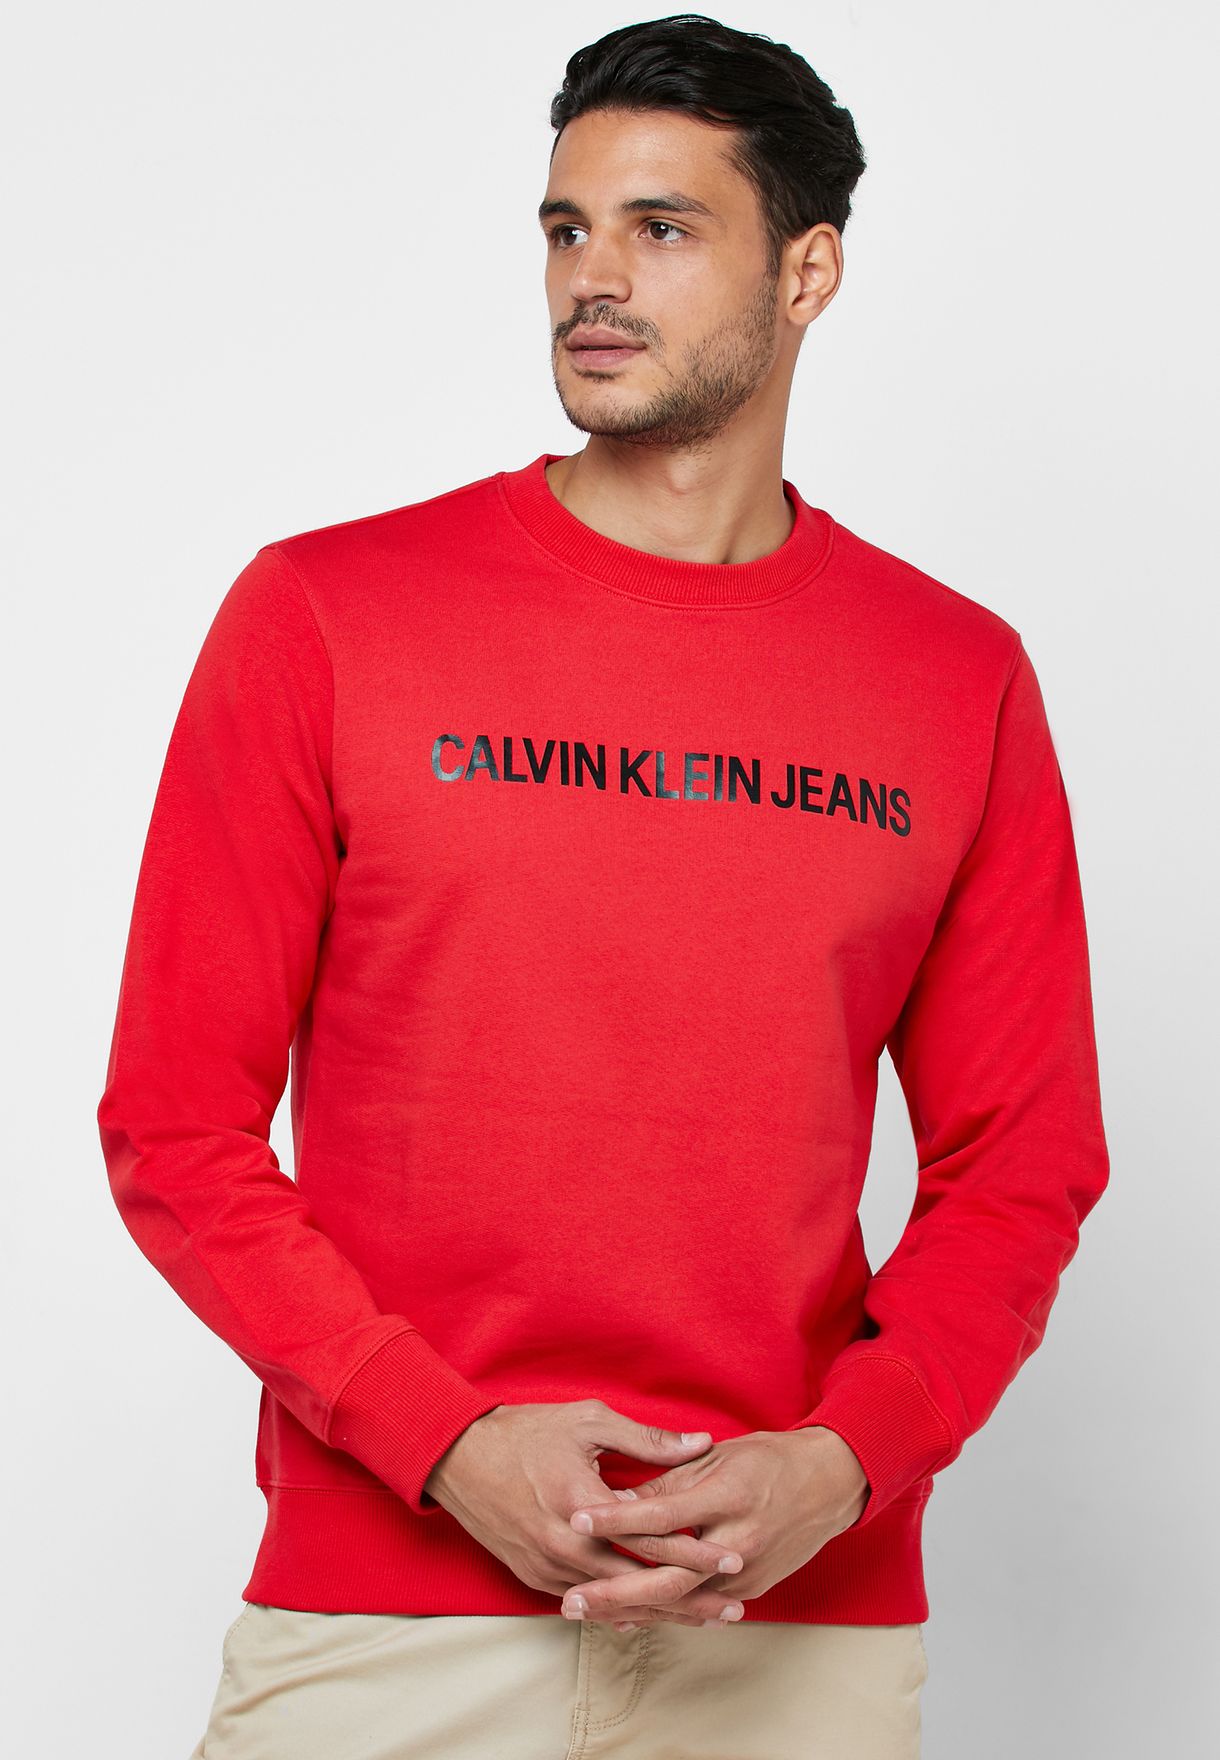 Buy Calvin Klein Jeans red 